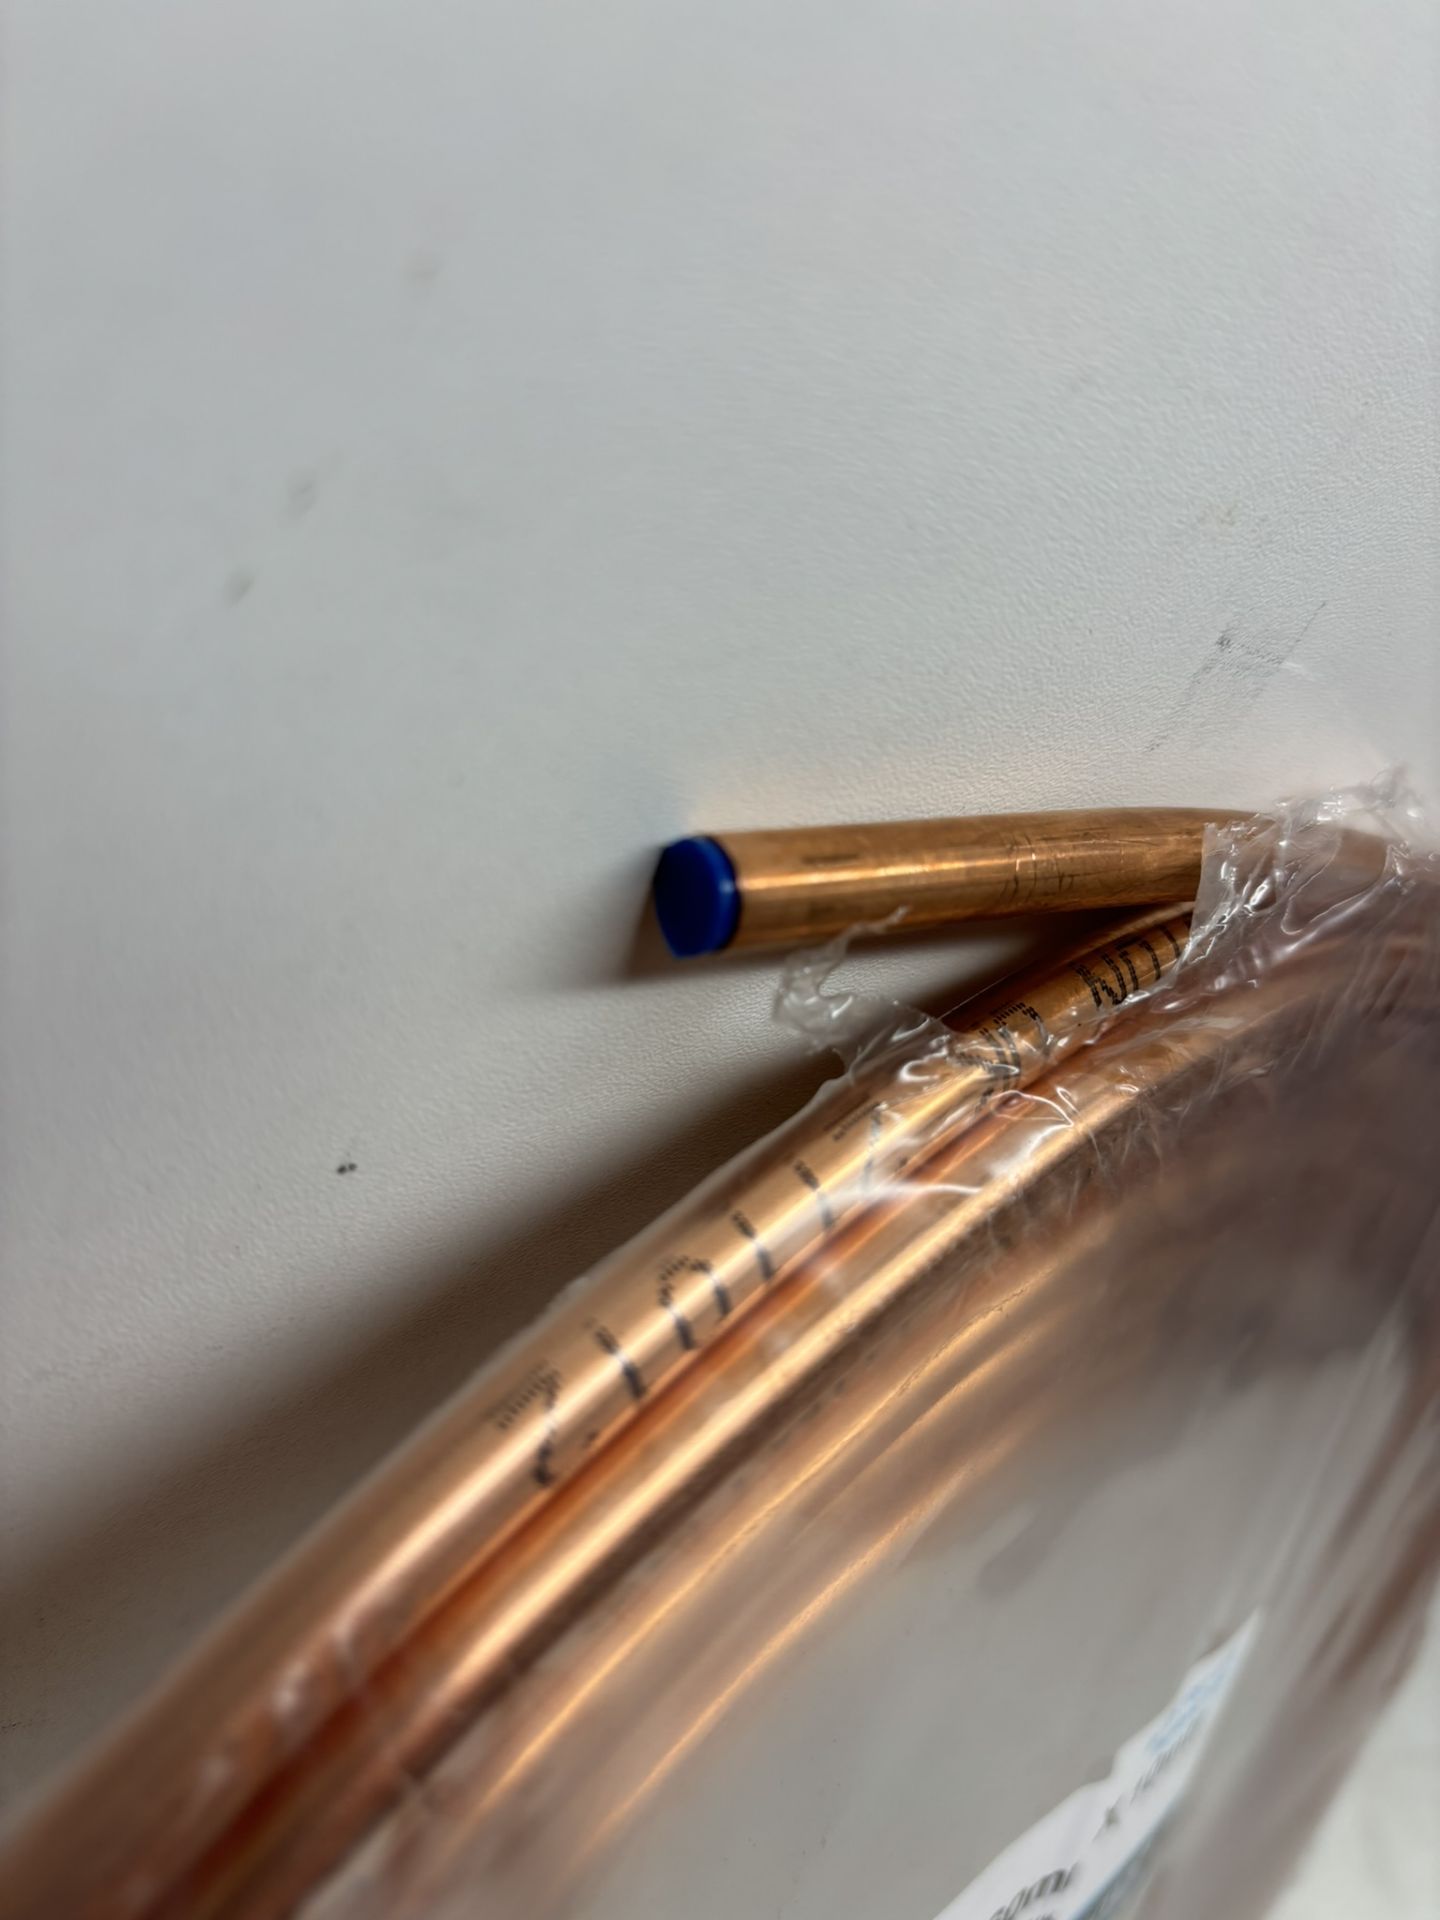 5 x Lawton 8.00mm x 0.60mm x 10Mtr Copper Plumbing Tube Coils - Image 6 of 9